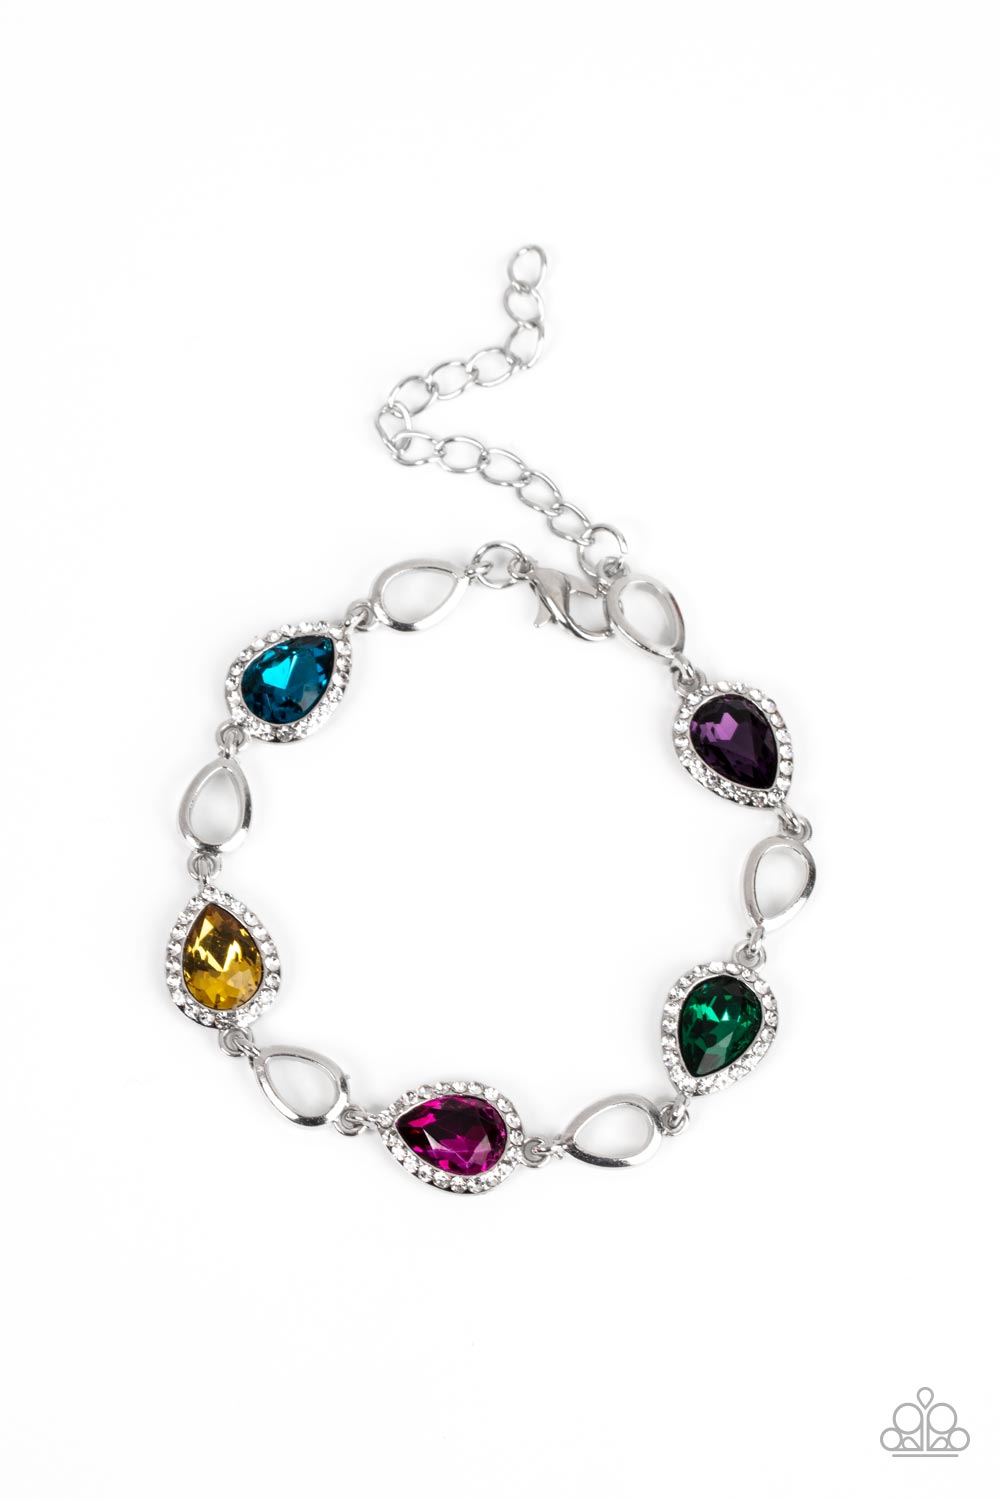 Timelessly Teary Multi Rhinestone Bracelet - Paparazzi Accessories- lightbox - CarasShop.com - $5 Jewelry by Cara Jewels